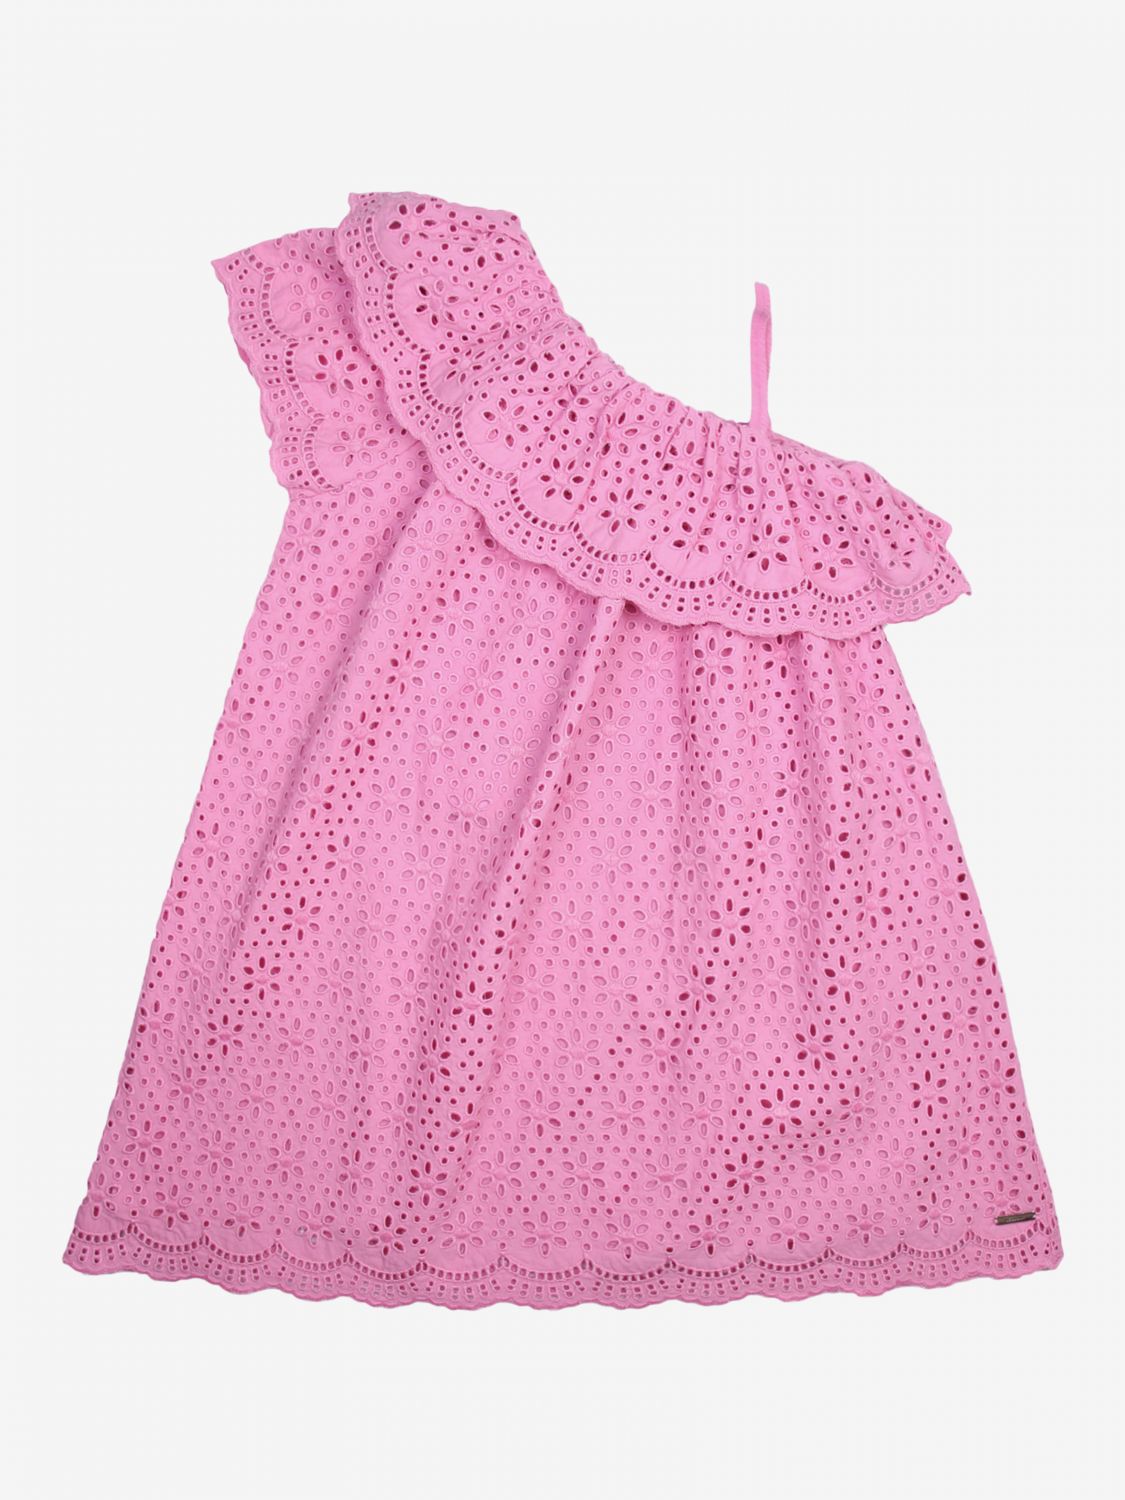 msgm pink dress